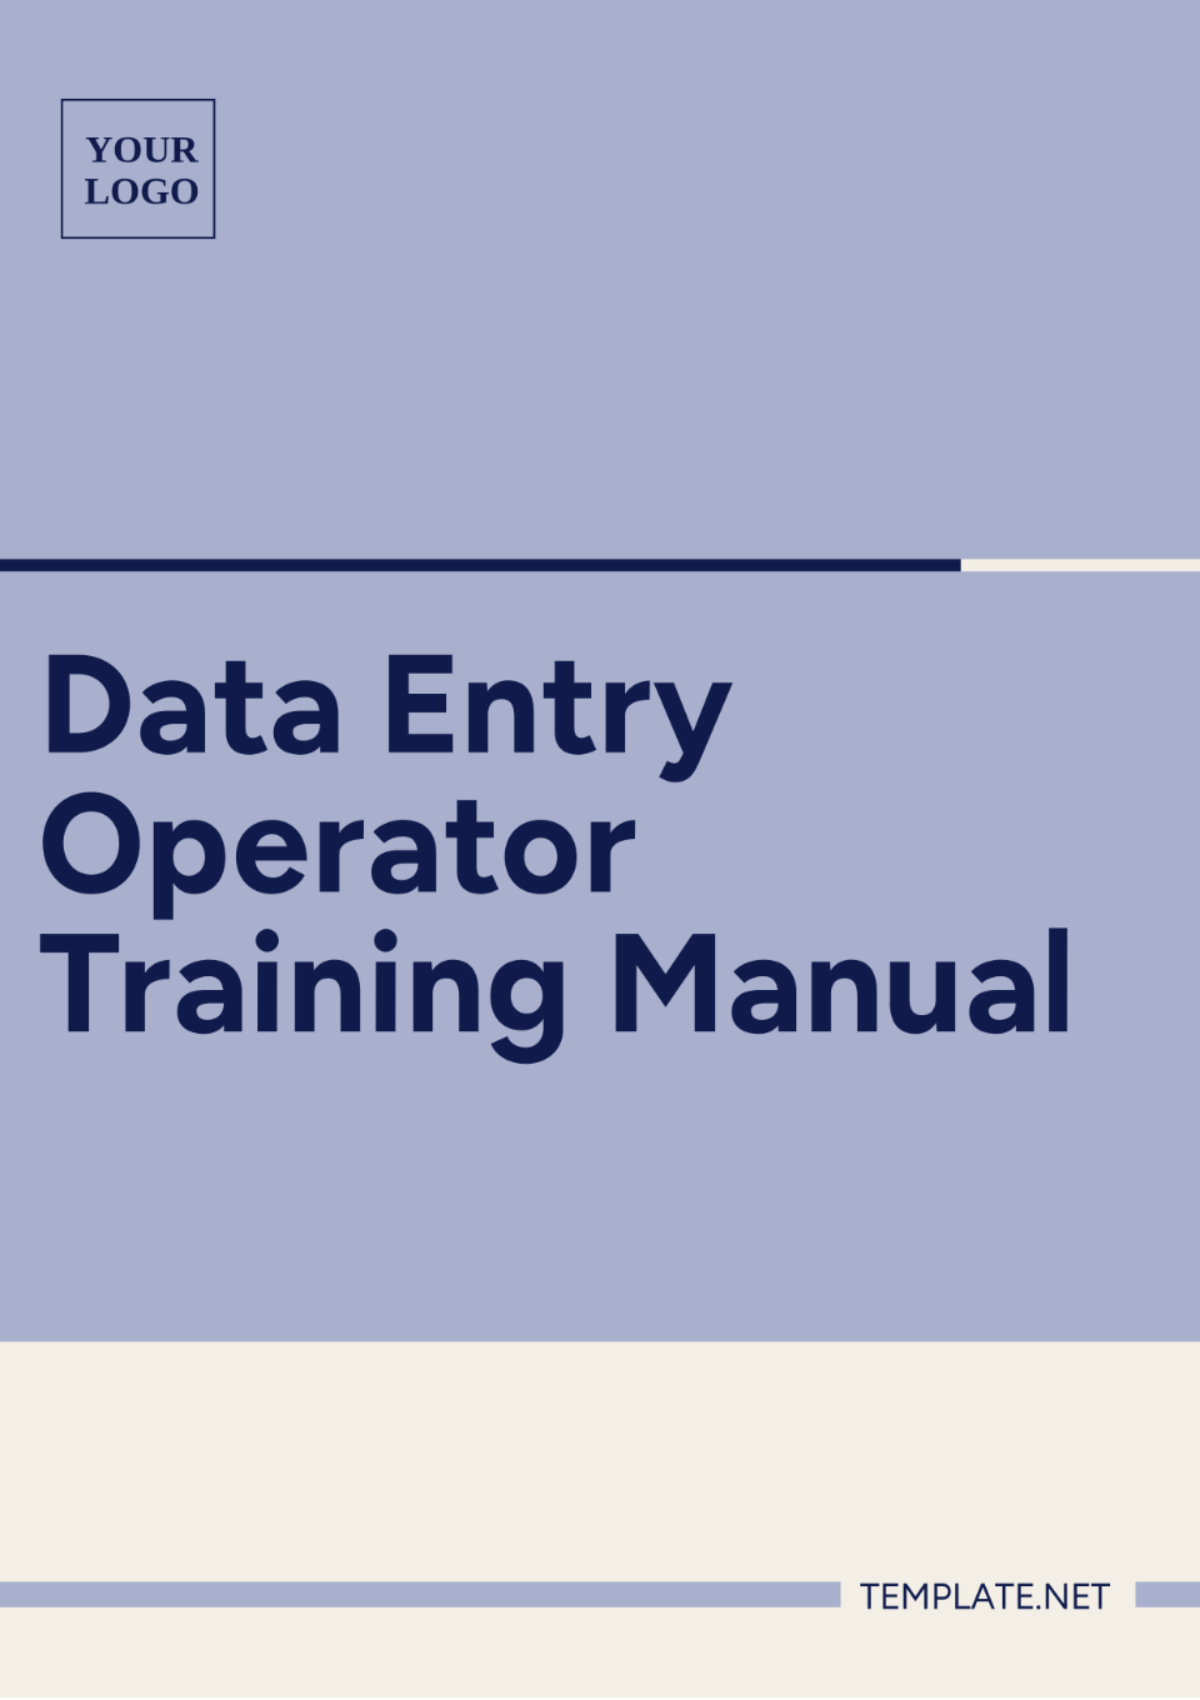 Data Entry Operator Training Manual Template